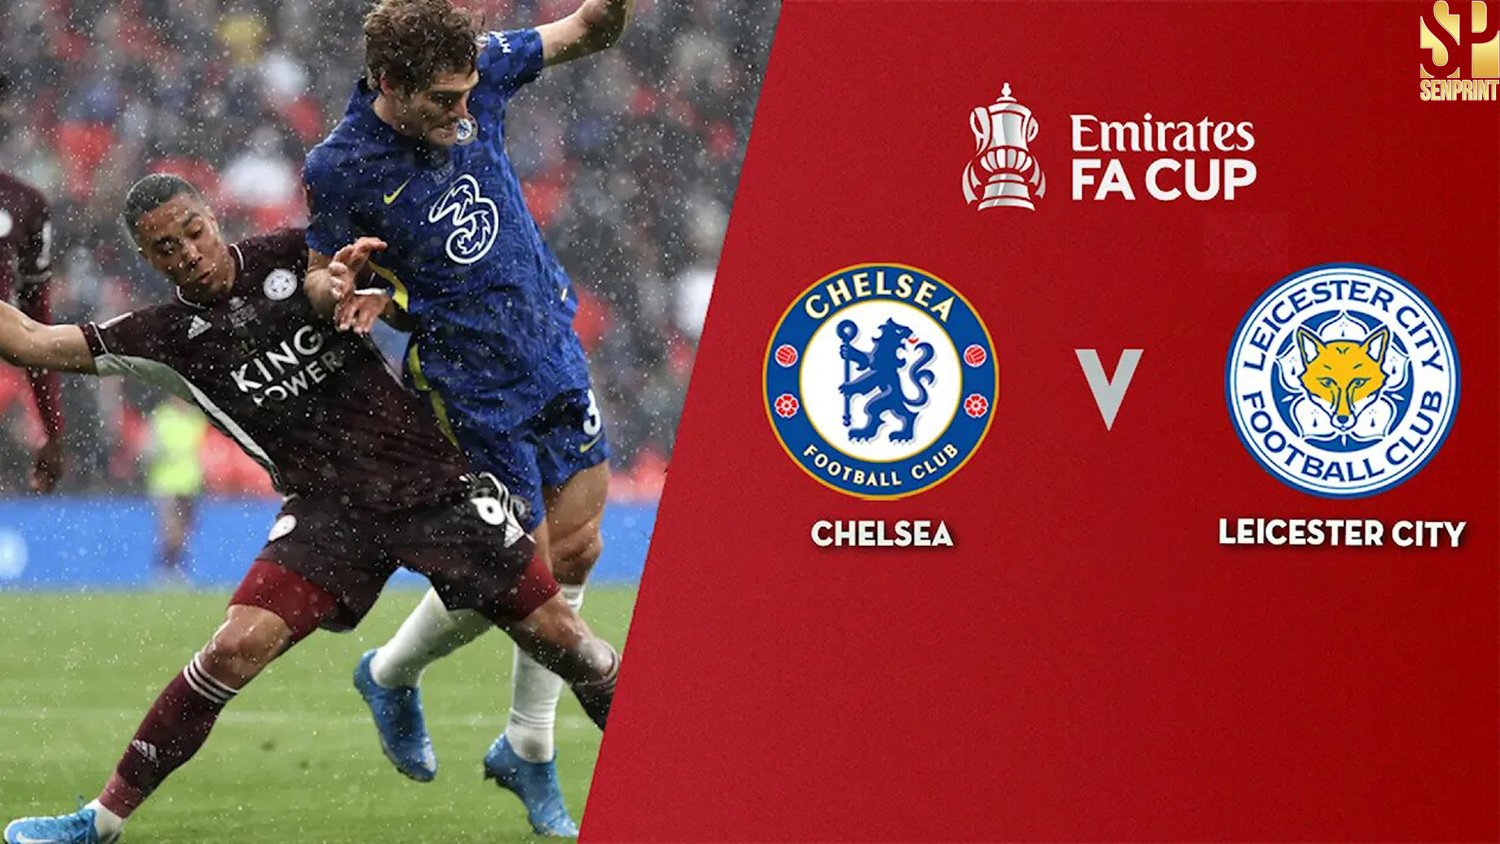 Stamford Bridge Showdown Chelsea and Leicester City Clash in Epic FA Cup Quarter-Final